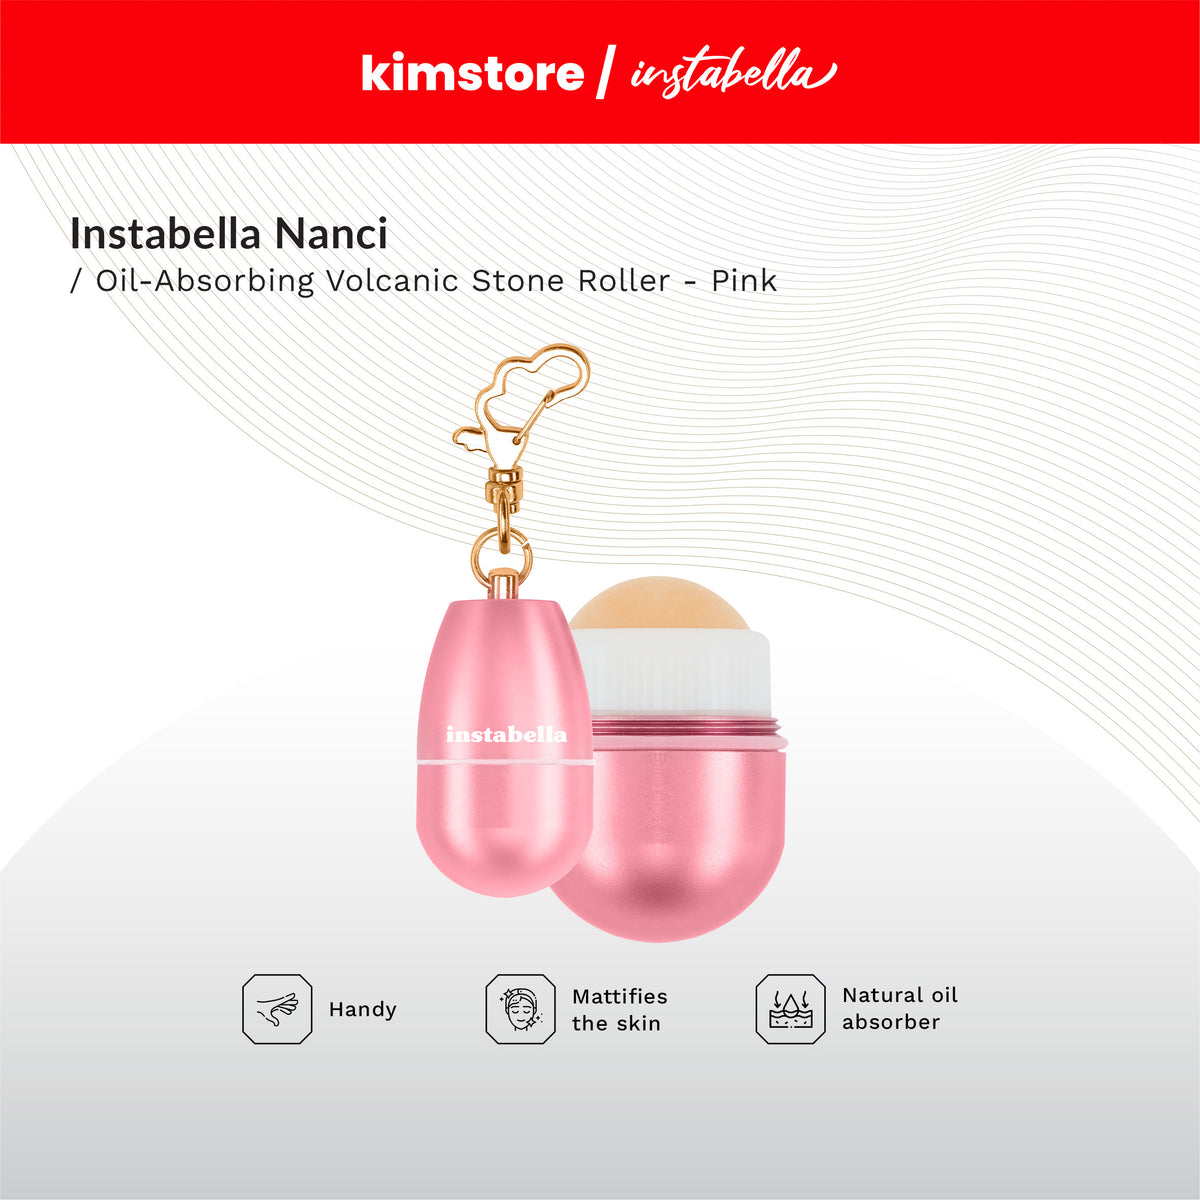 Instabella Nanci Oil-Absorbing Volcanic Stone Roller